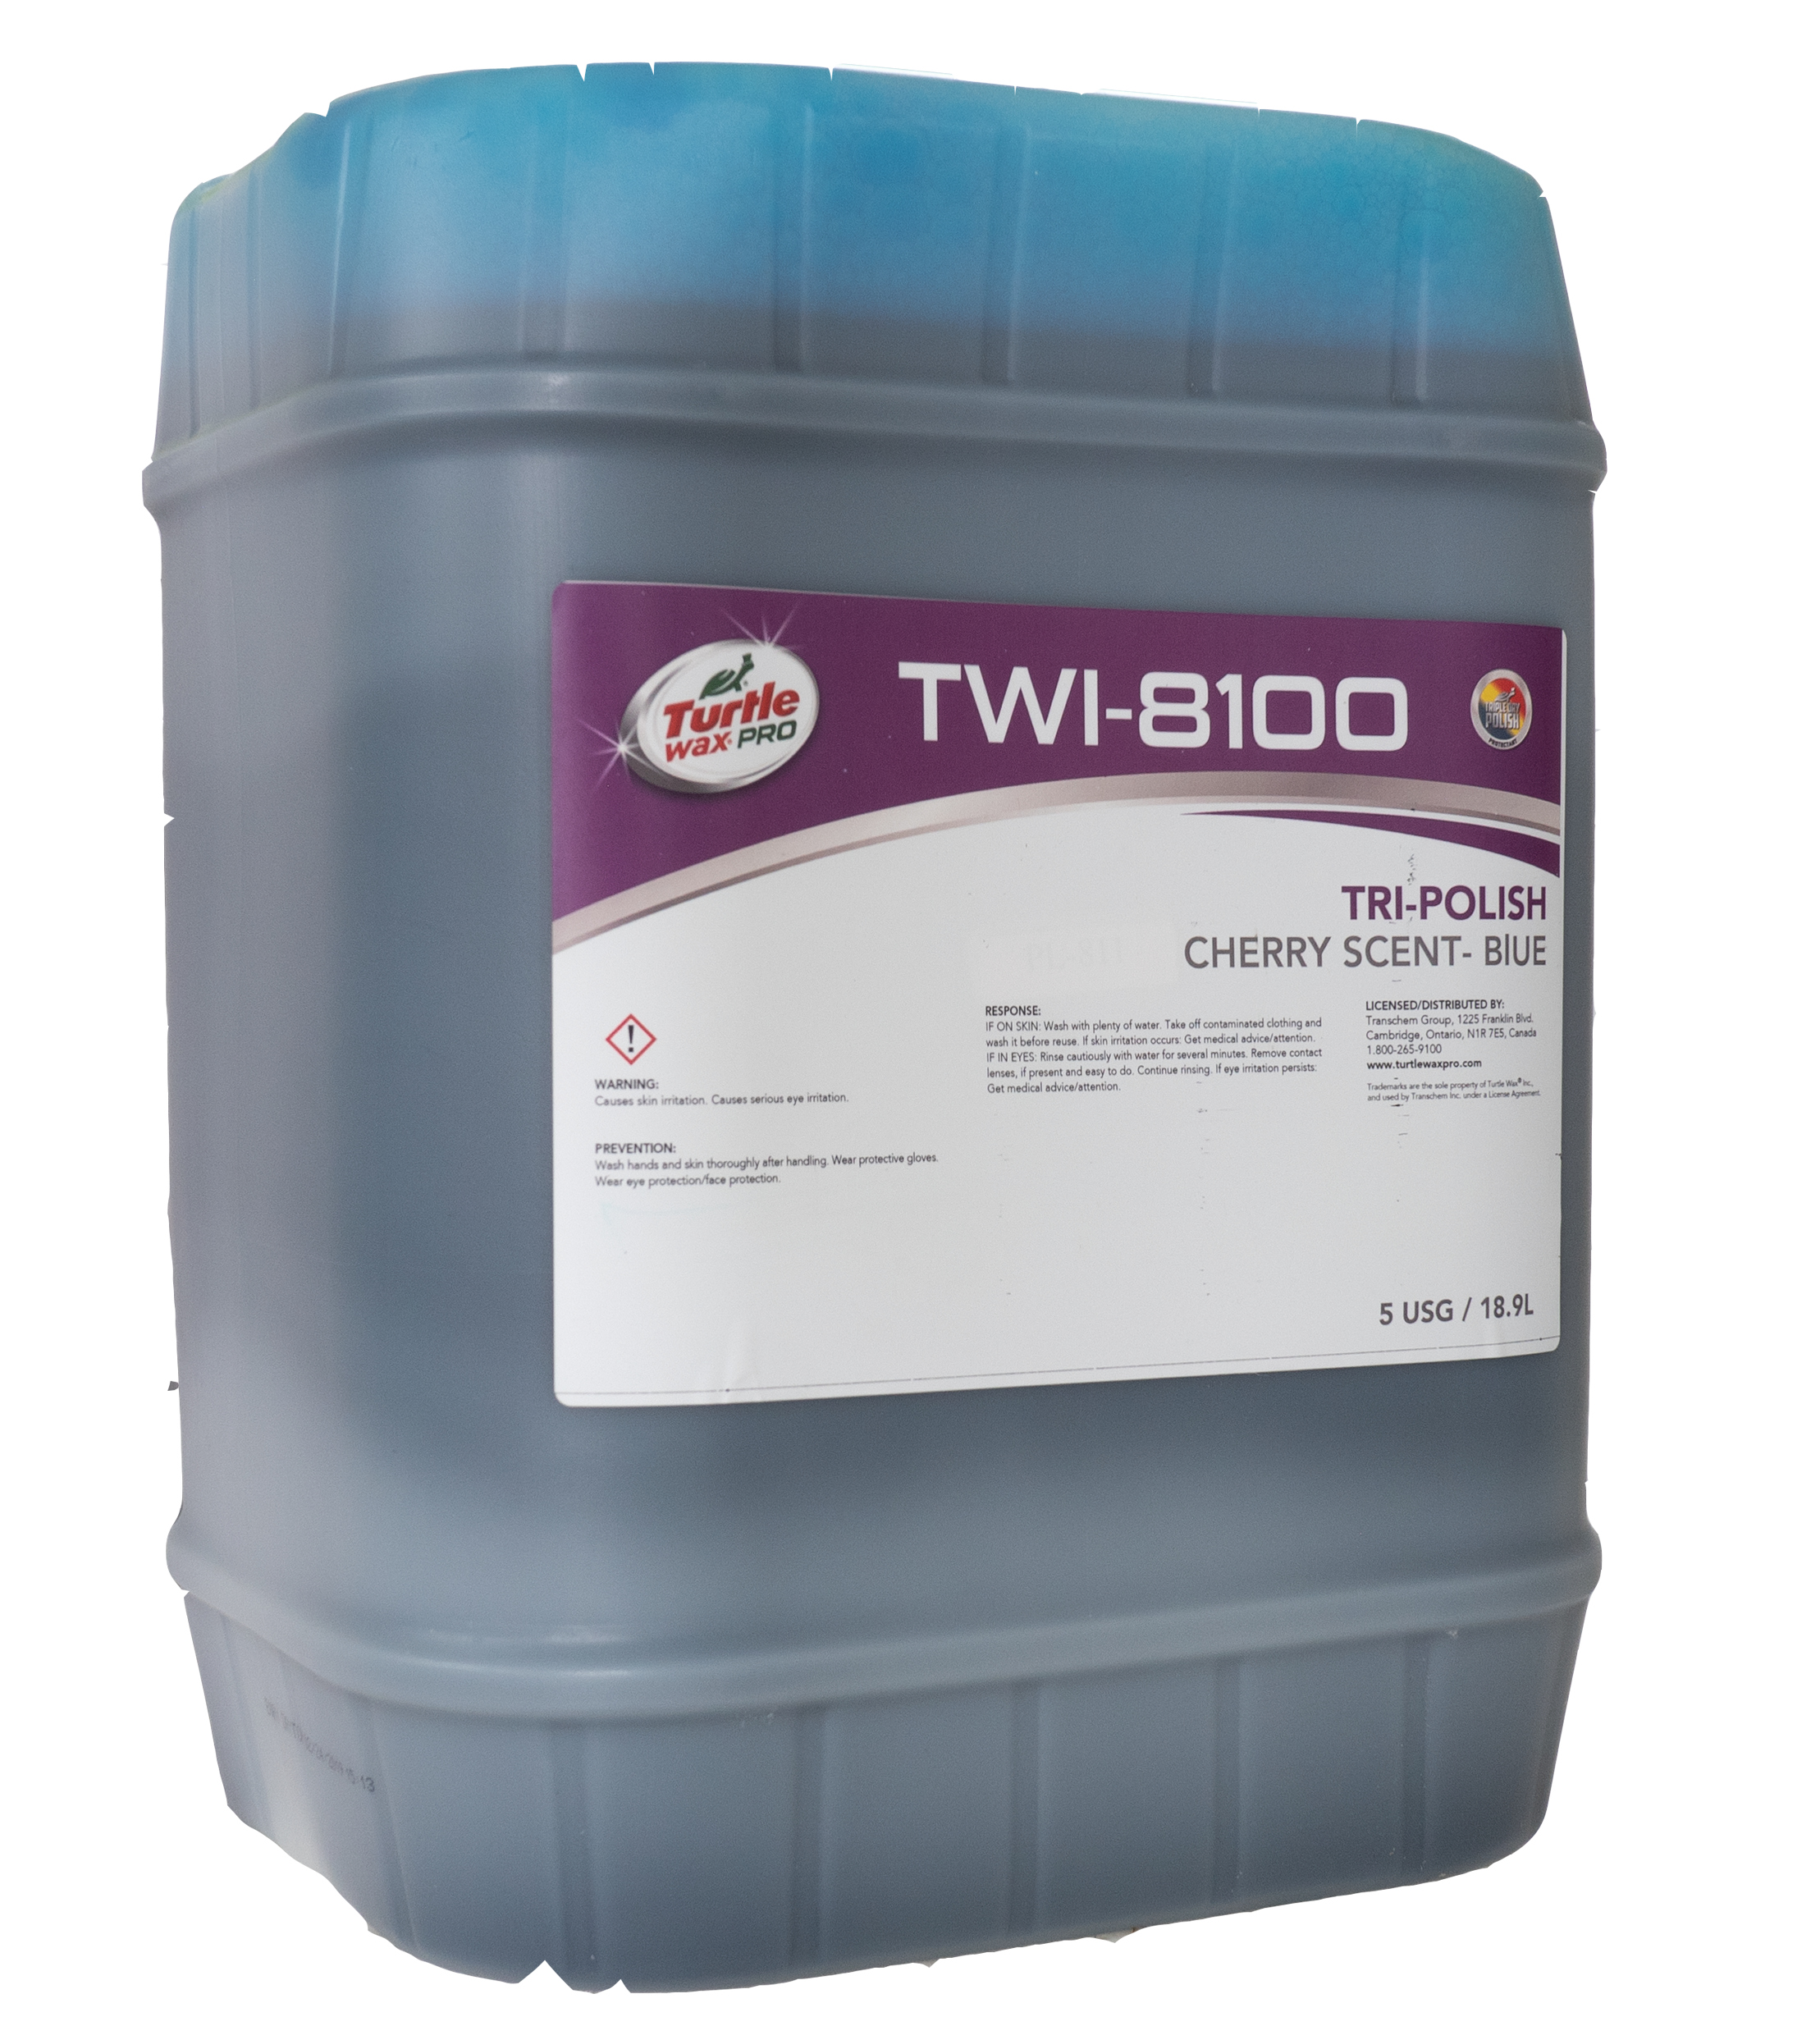 TWI 8100 - Turtle Wax® Pro Tri-Polish with Cherry Scent, Blue